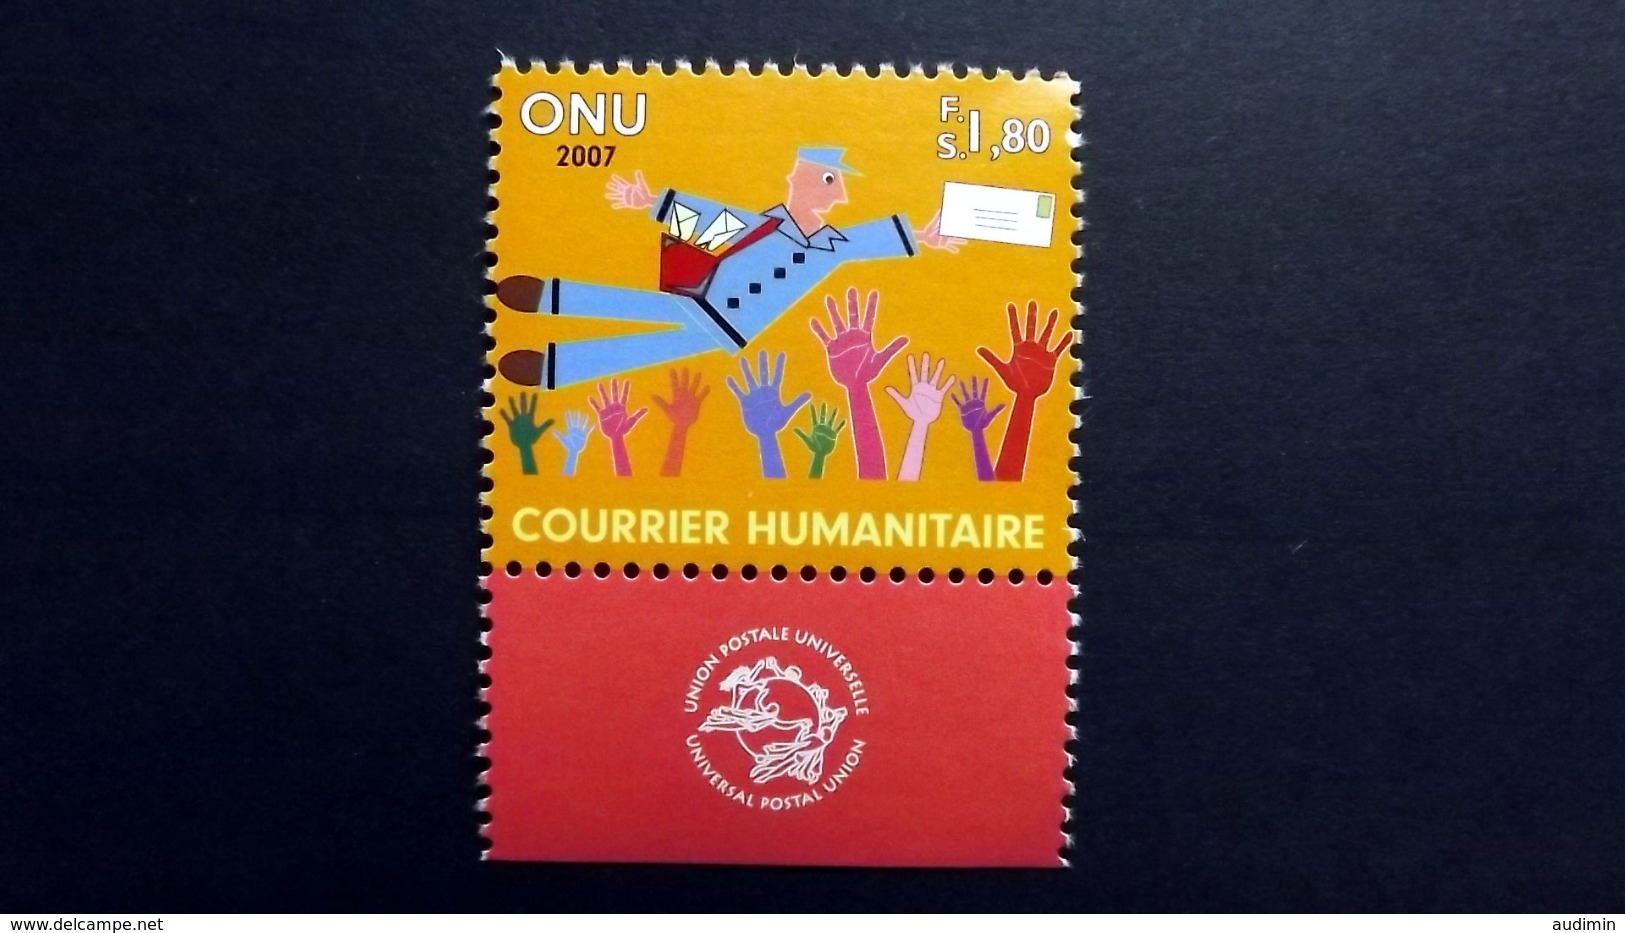 UNO-Genf 583 **/mnh, Humanitäre Postsendungen - Ongebruikt